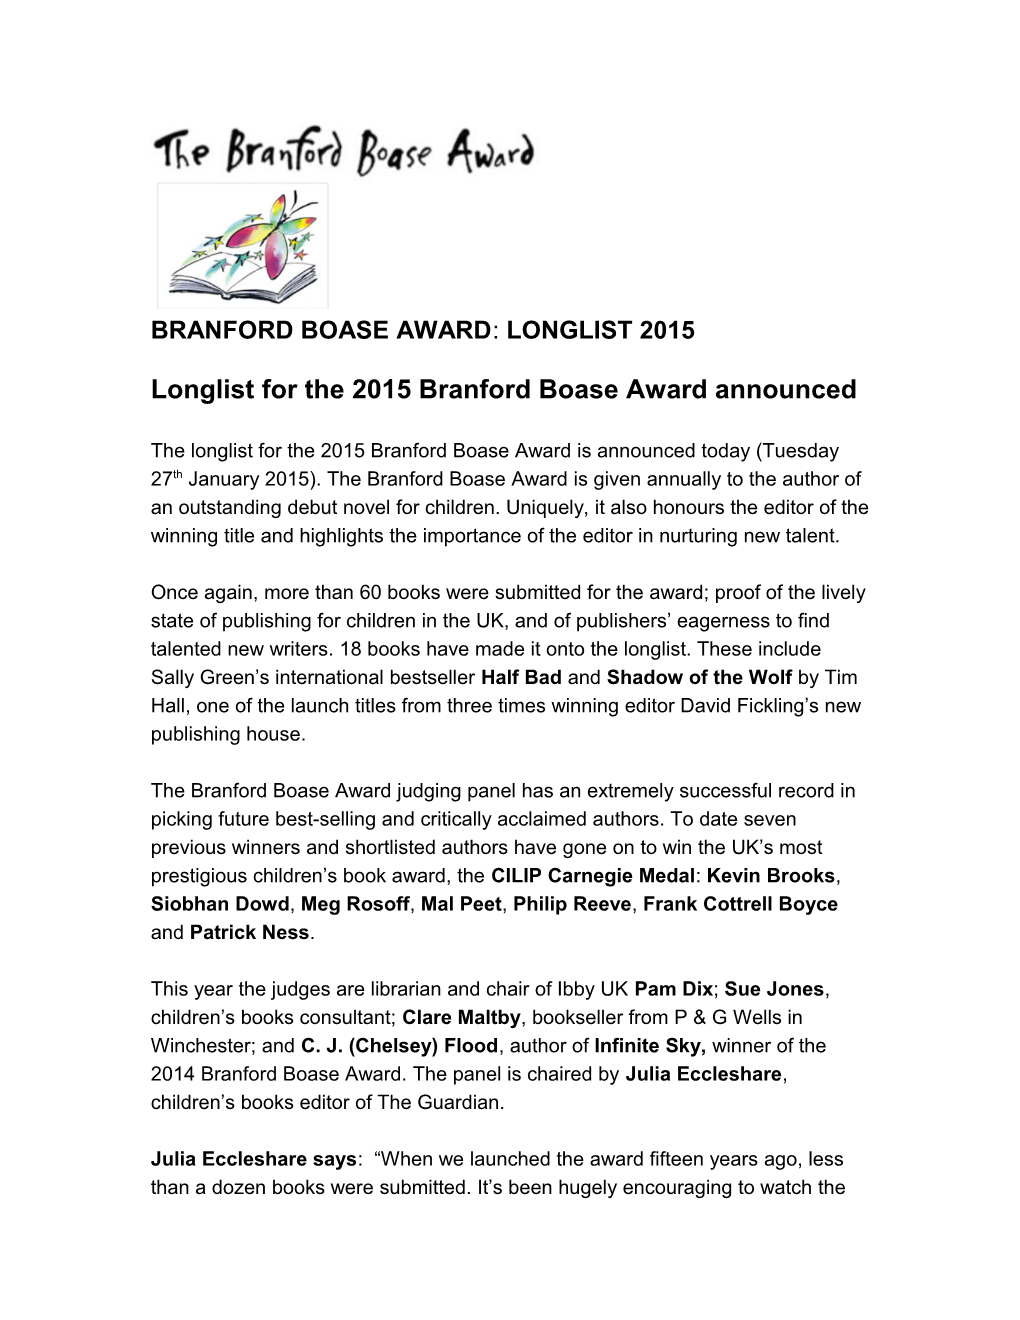 Longlist for the 2015 Branford Boase Award Announced